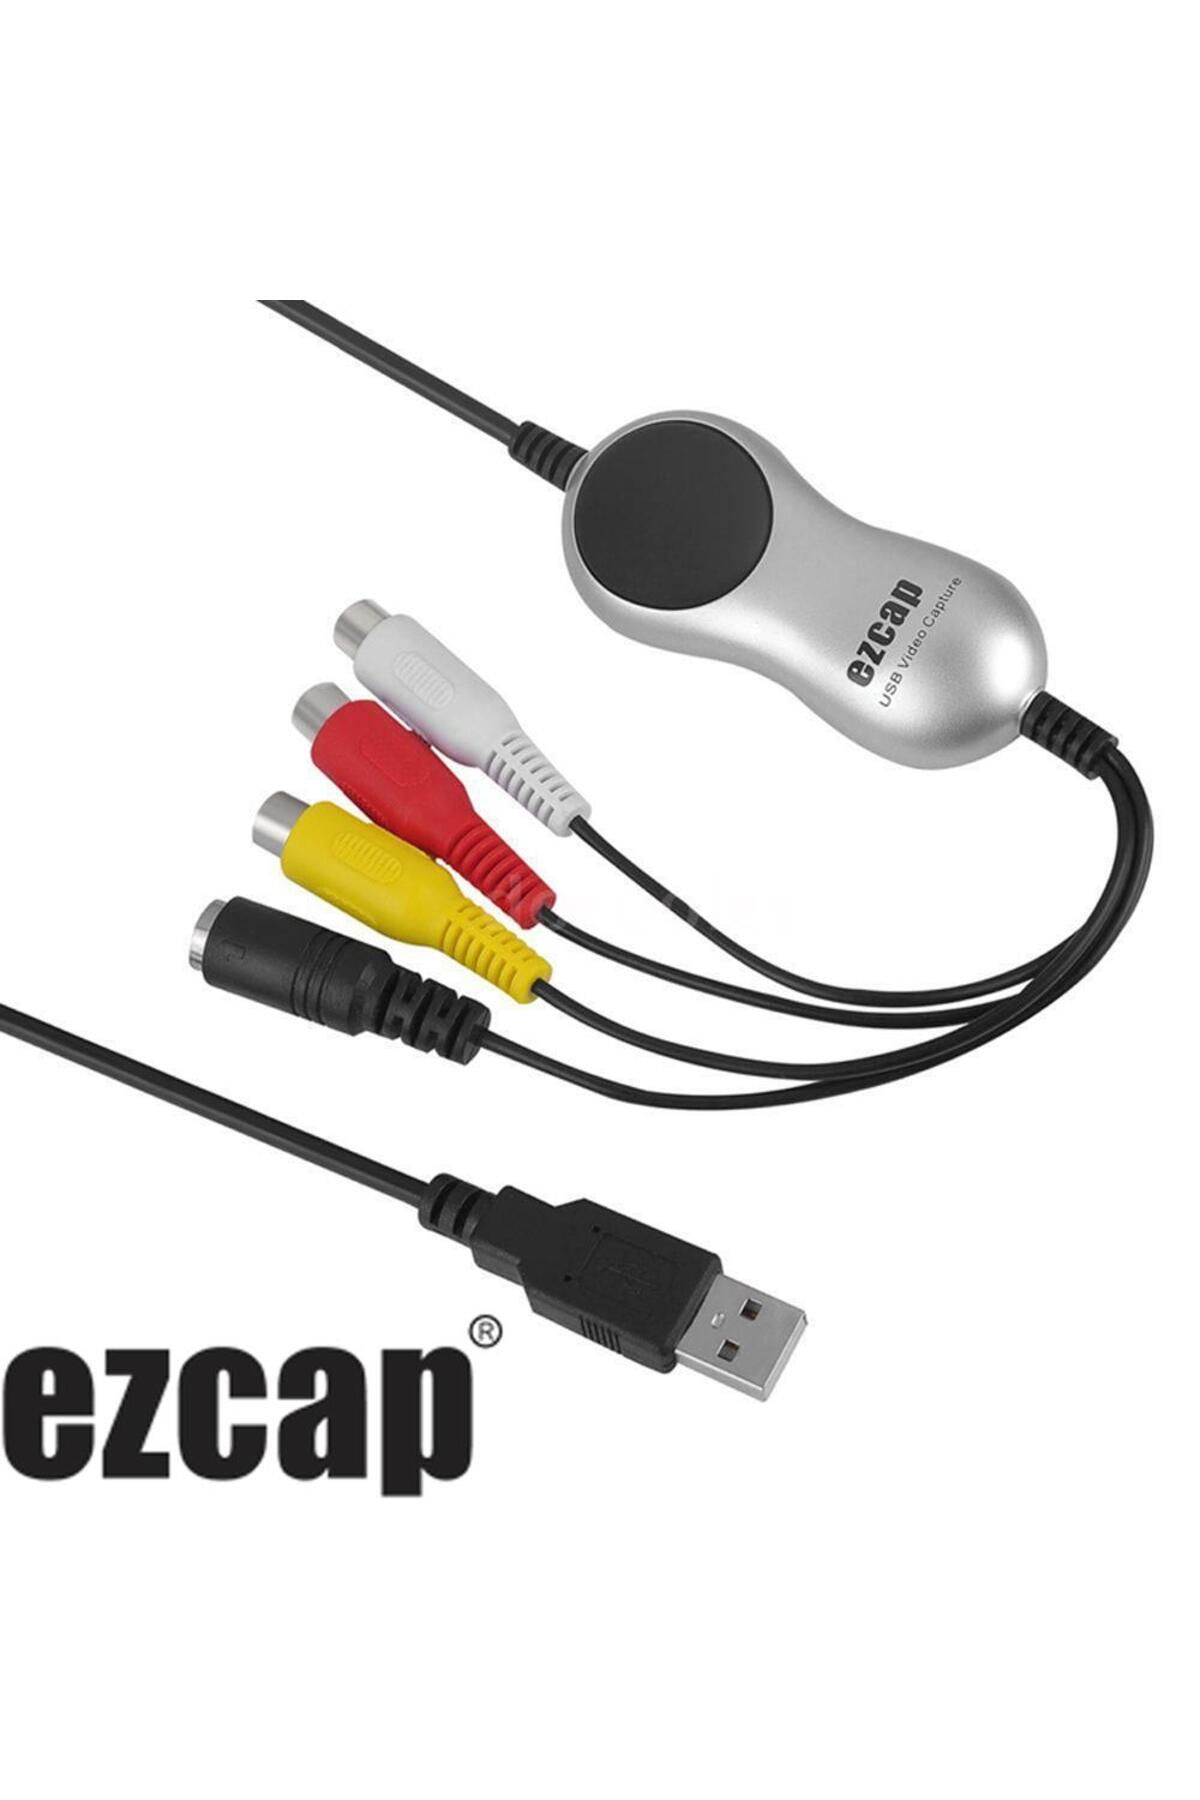 Ezcap 170 Usb 2.0 Xbox Ps3 Vhs Hi8 Mini Dv Video Capture Kartı